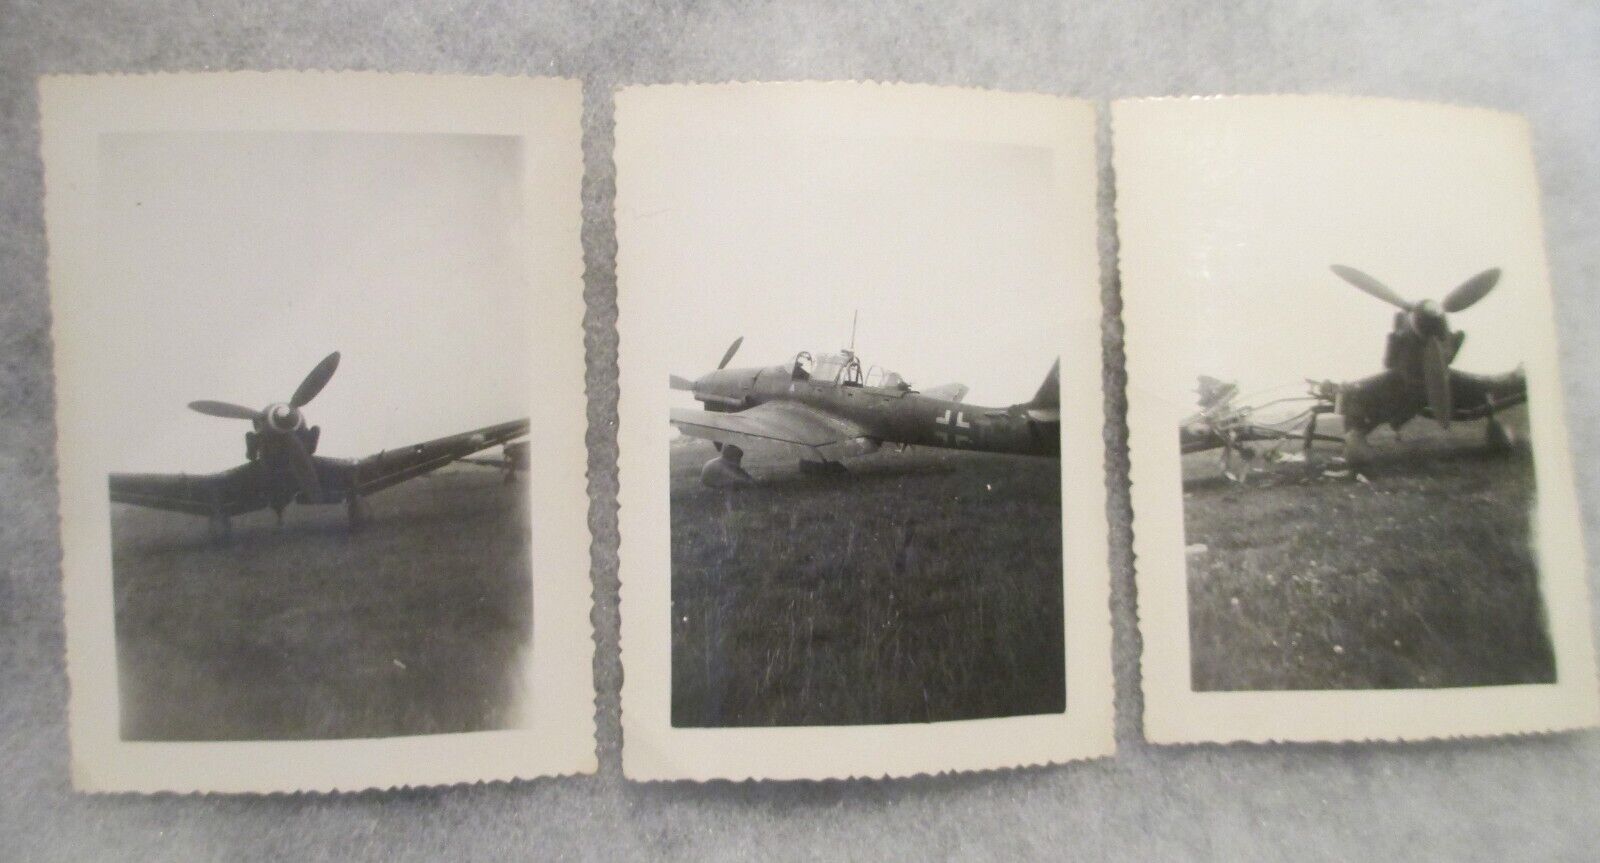 *PHOTOS* Captured German Junkers Ju-87 Stuka Dive Bomber - Vintage Originals